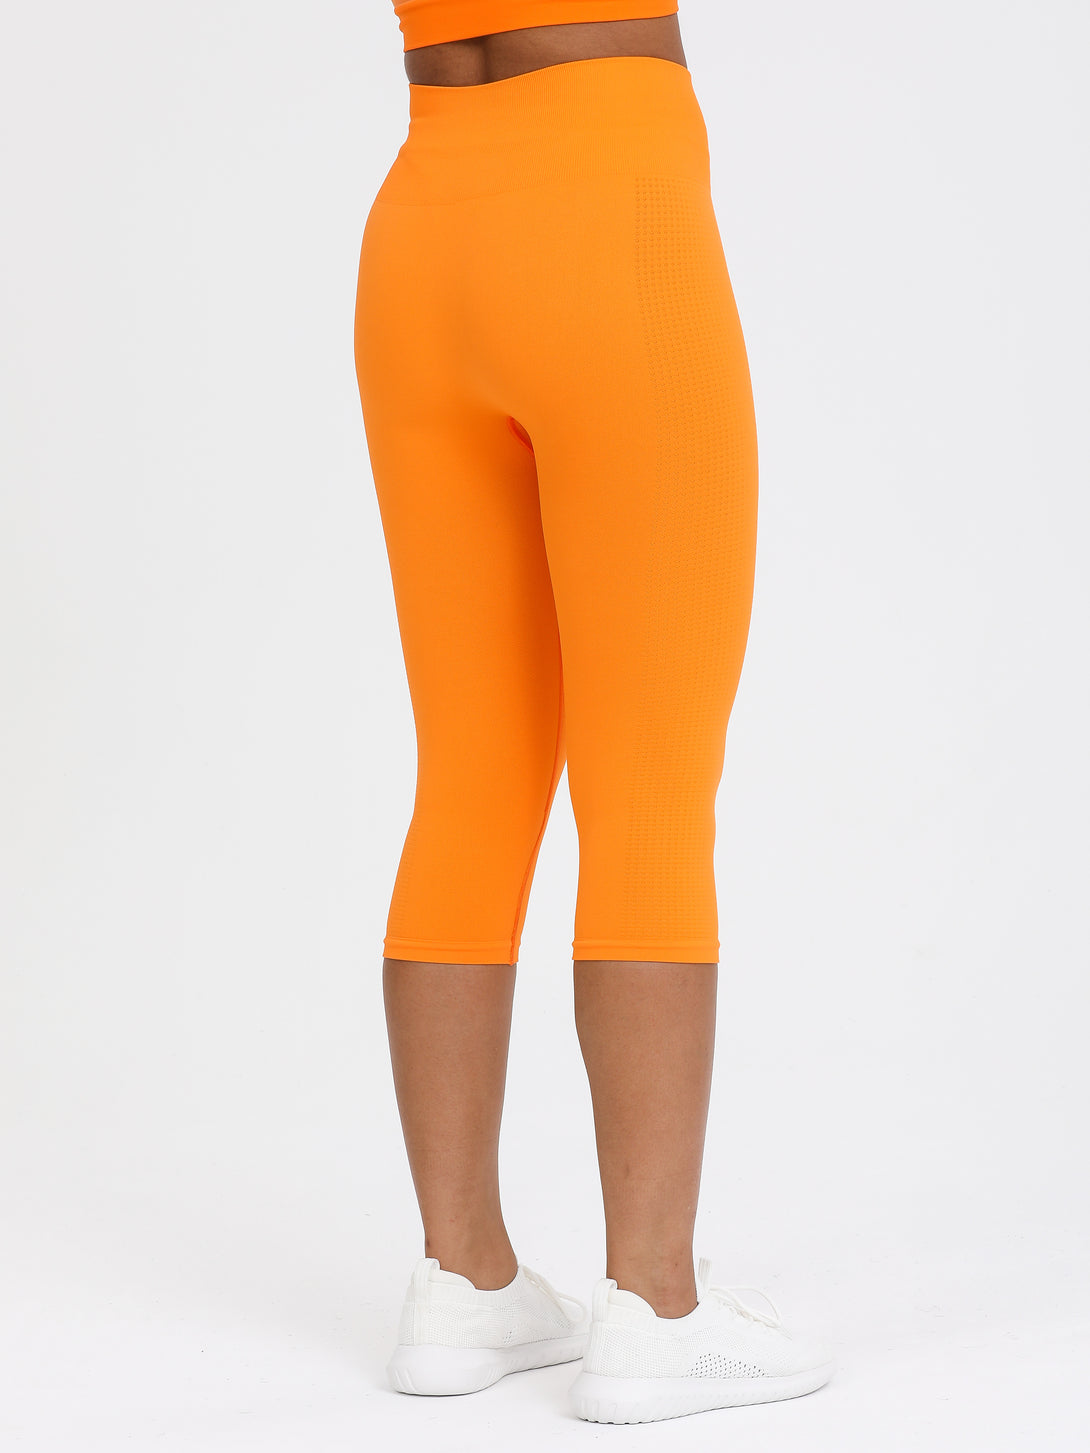 A Woman Wearing Orange Color Seamless Capri Legging